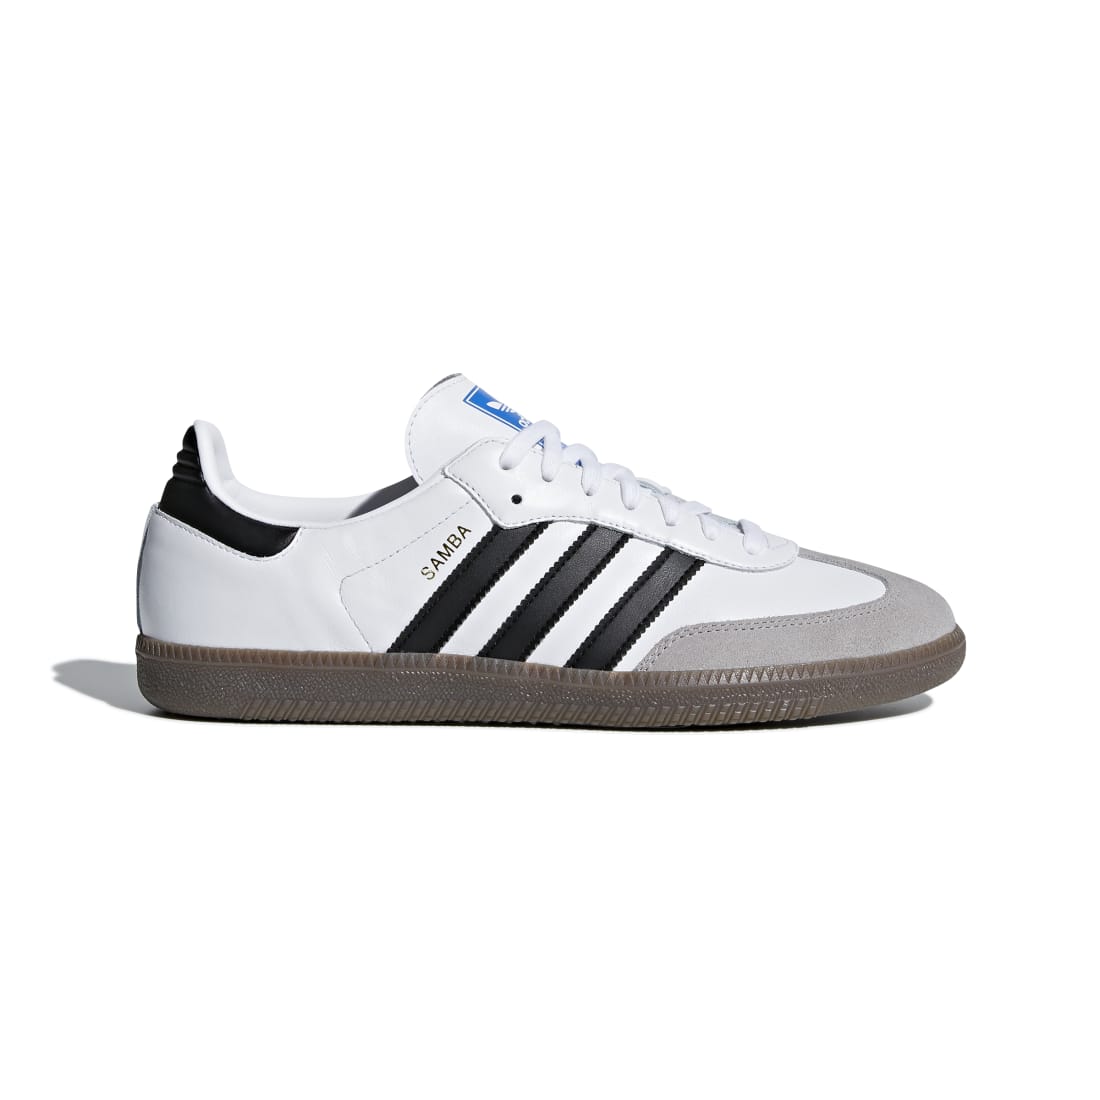 Buy Adidas Samba OG - Men's/Women’s Shoes online | Foot Locker Qatar